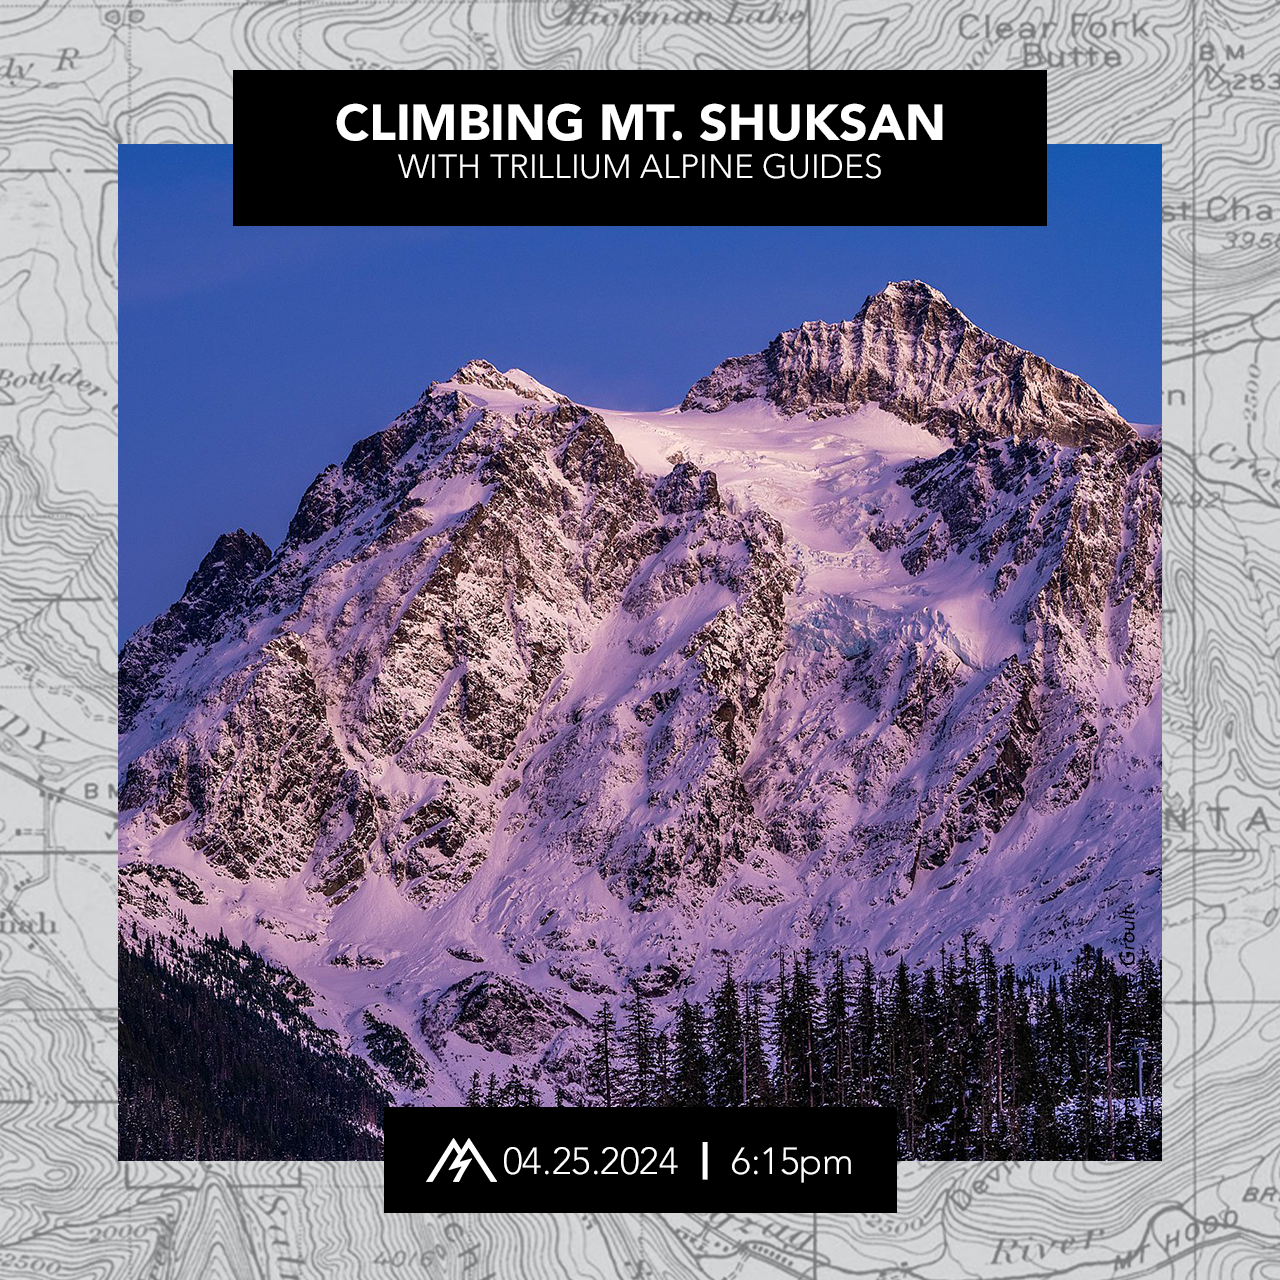 Climbing Mt. Shuksan with Trillium Alpine Guides